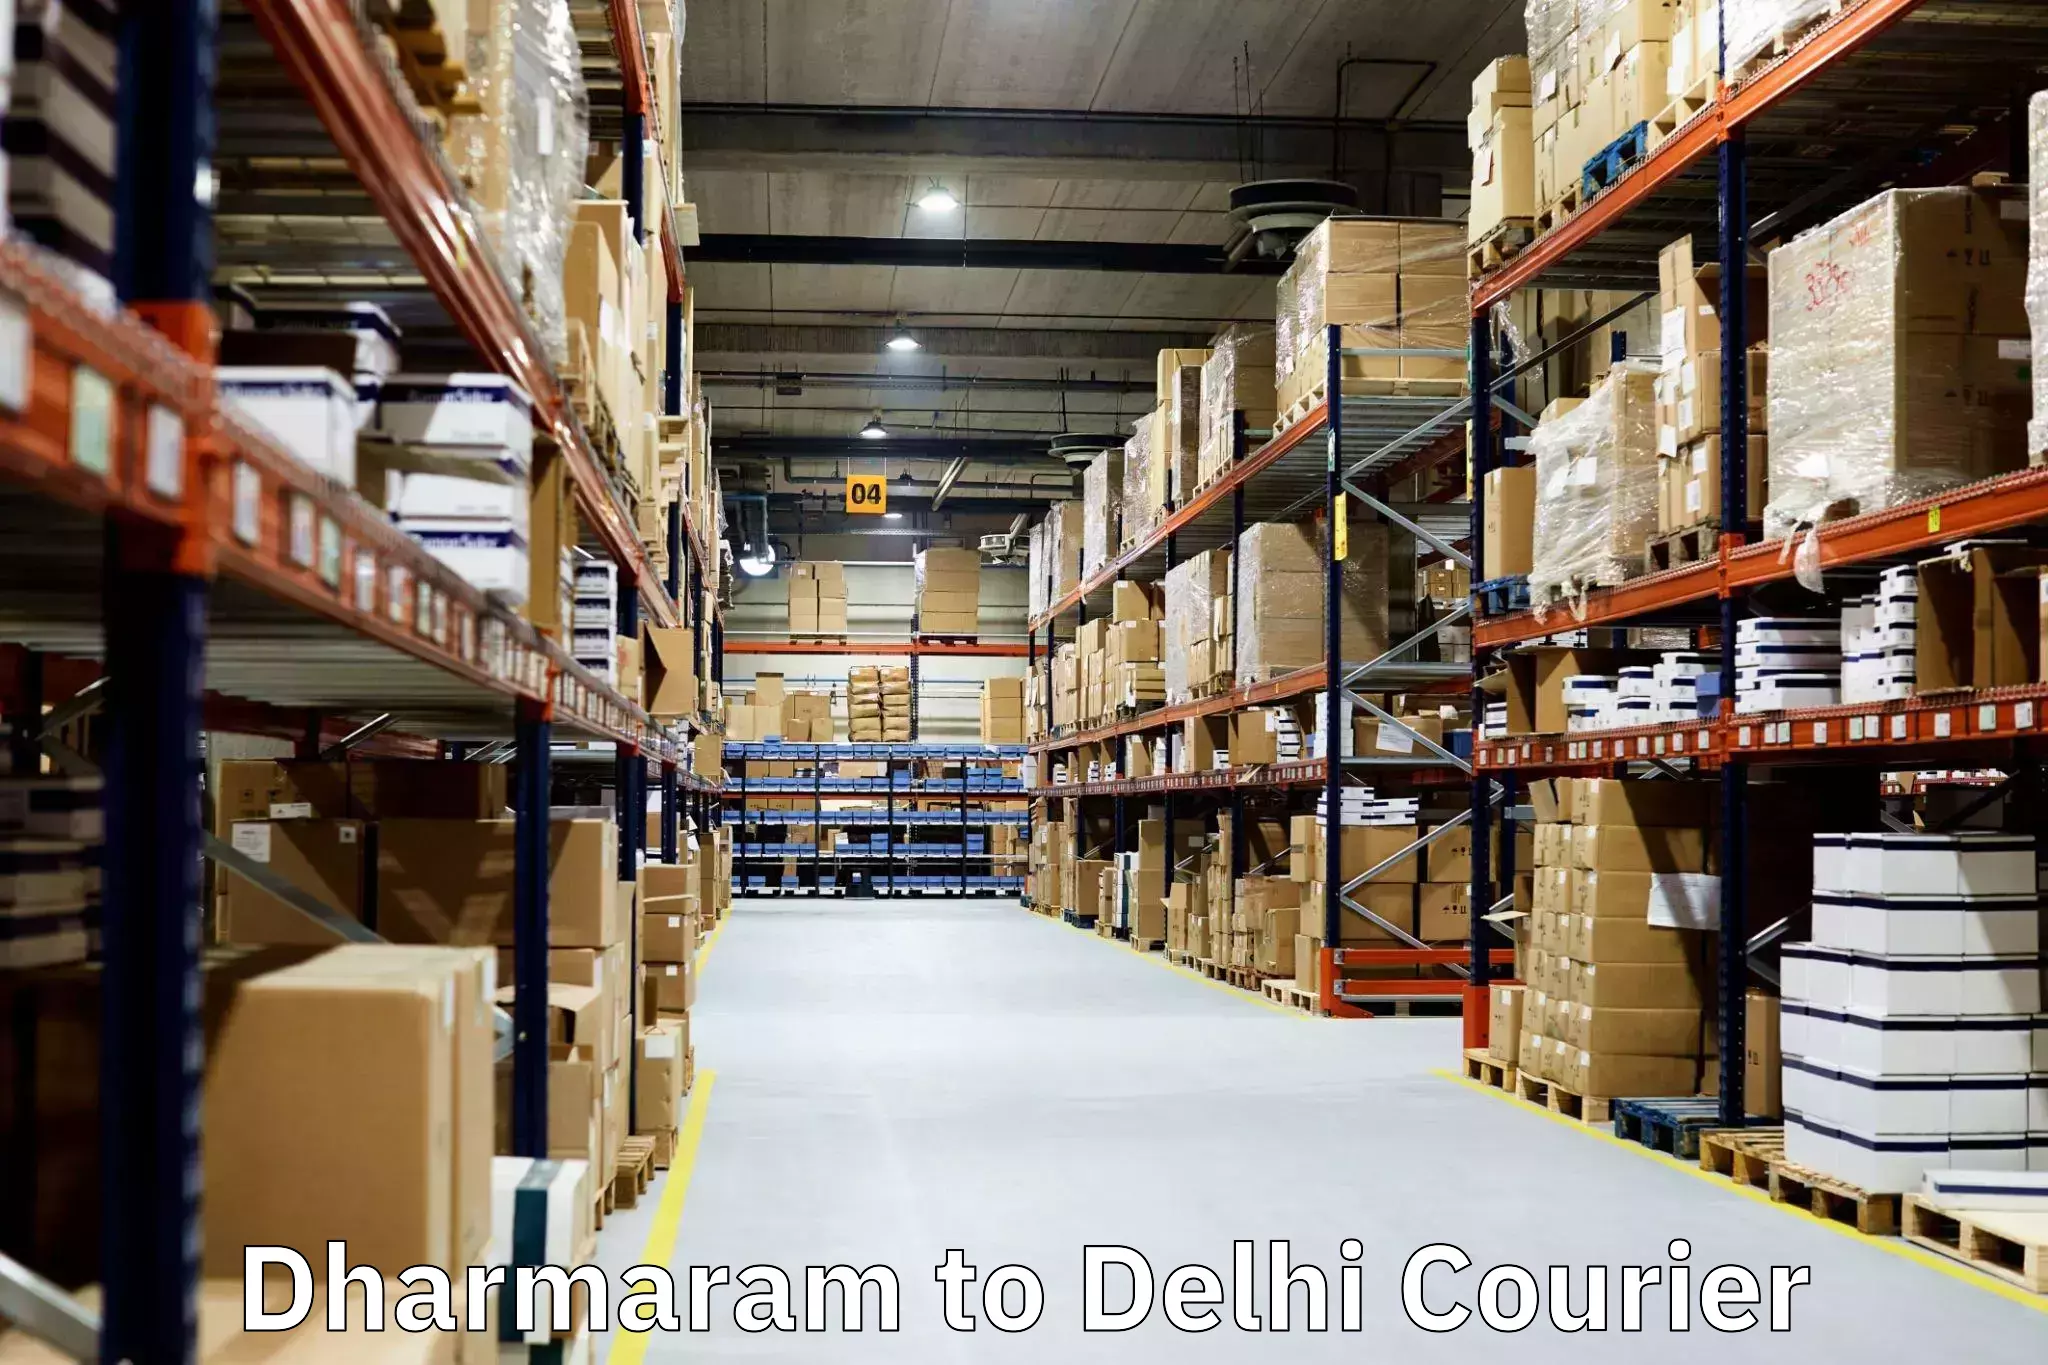 Professional furniture relocation in Dharmaram to East Delhi